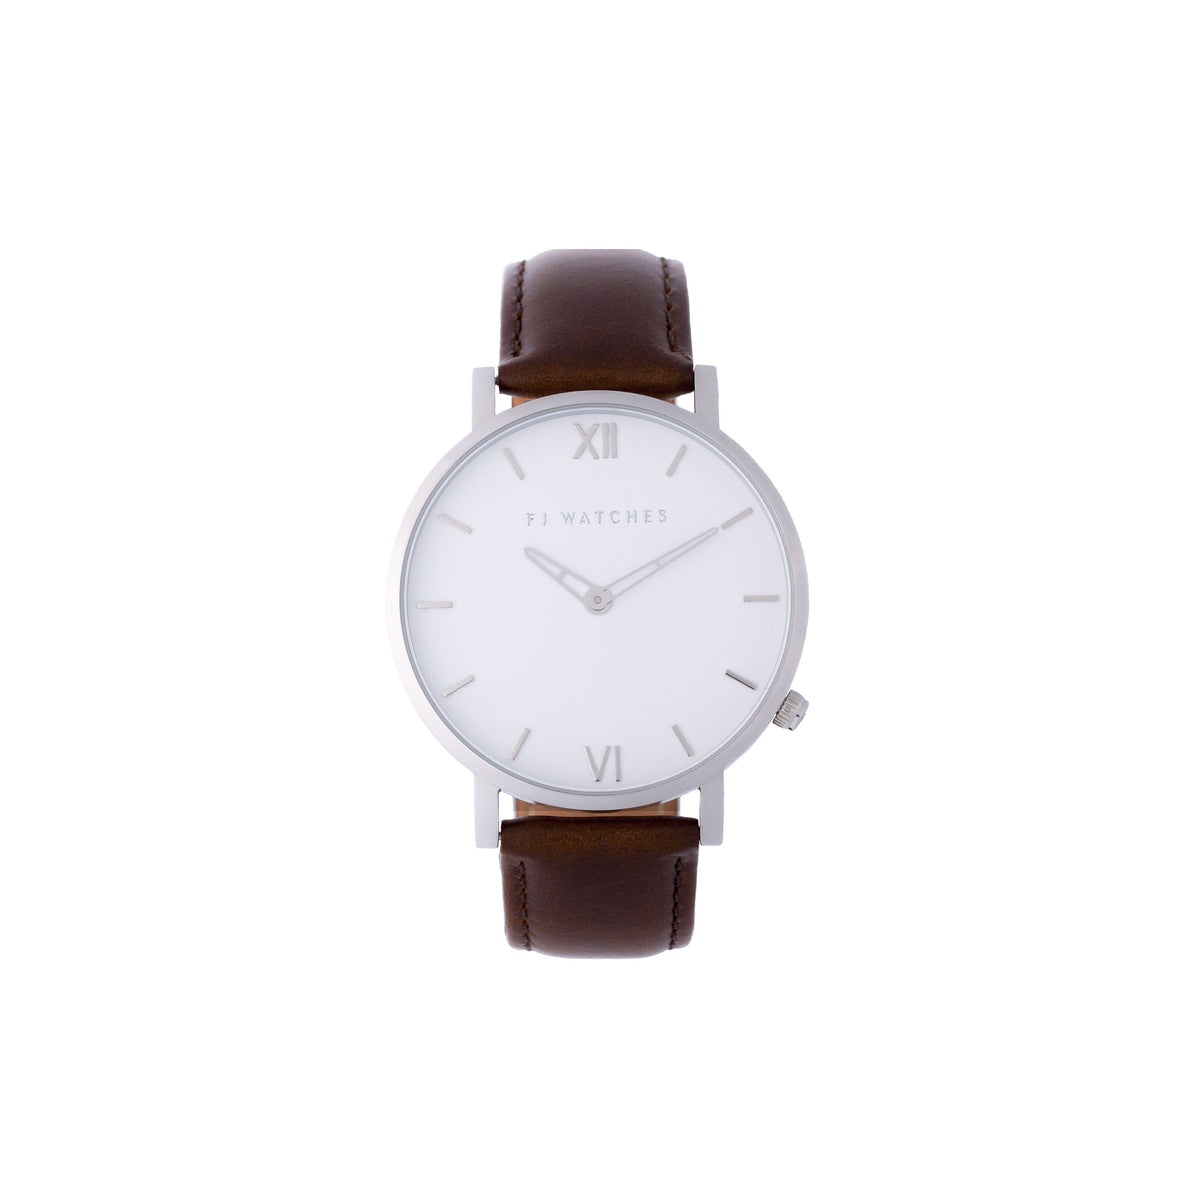 FJ Watches silver sun white women 36mm brown leather strap watch minimalist